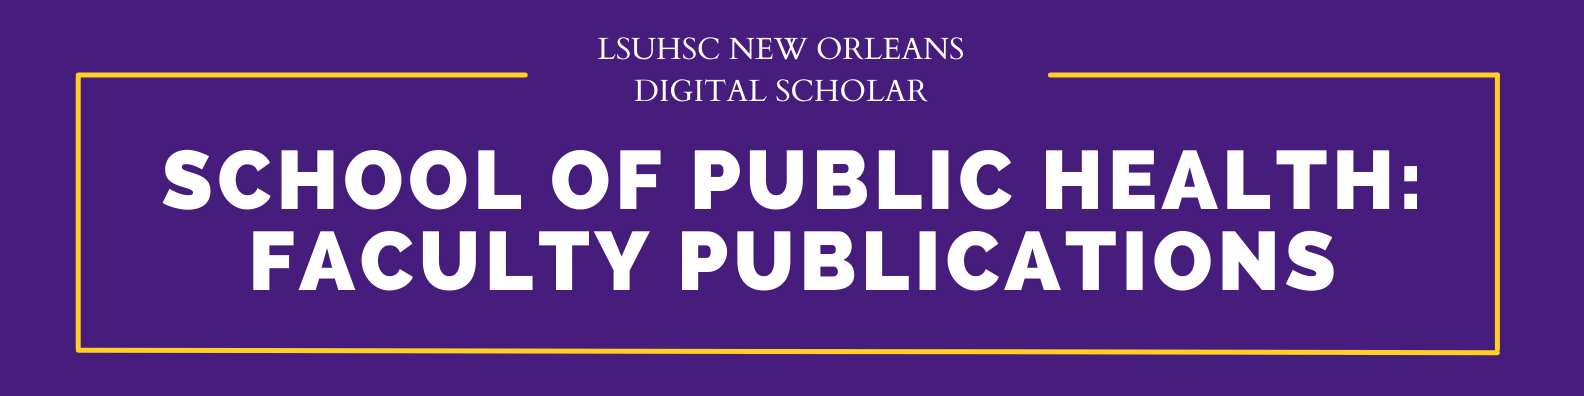 School of Public Health Faculty Publications